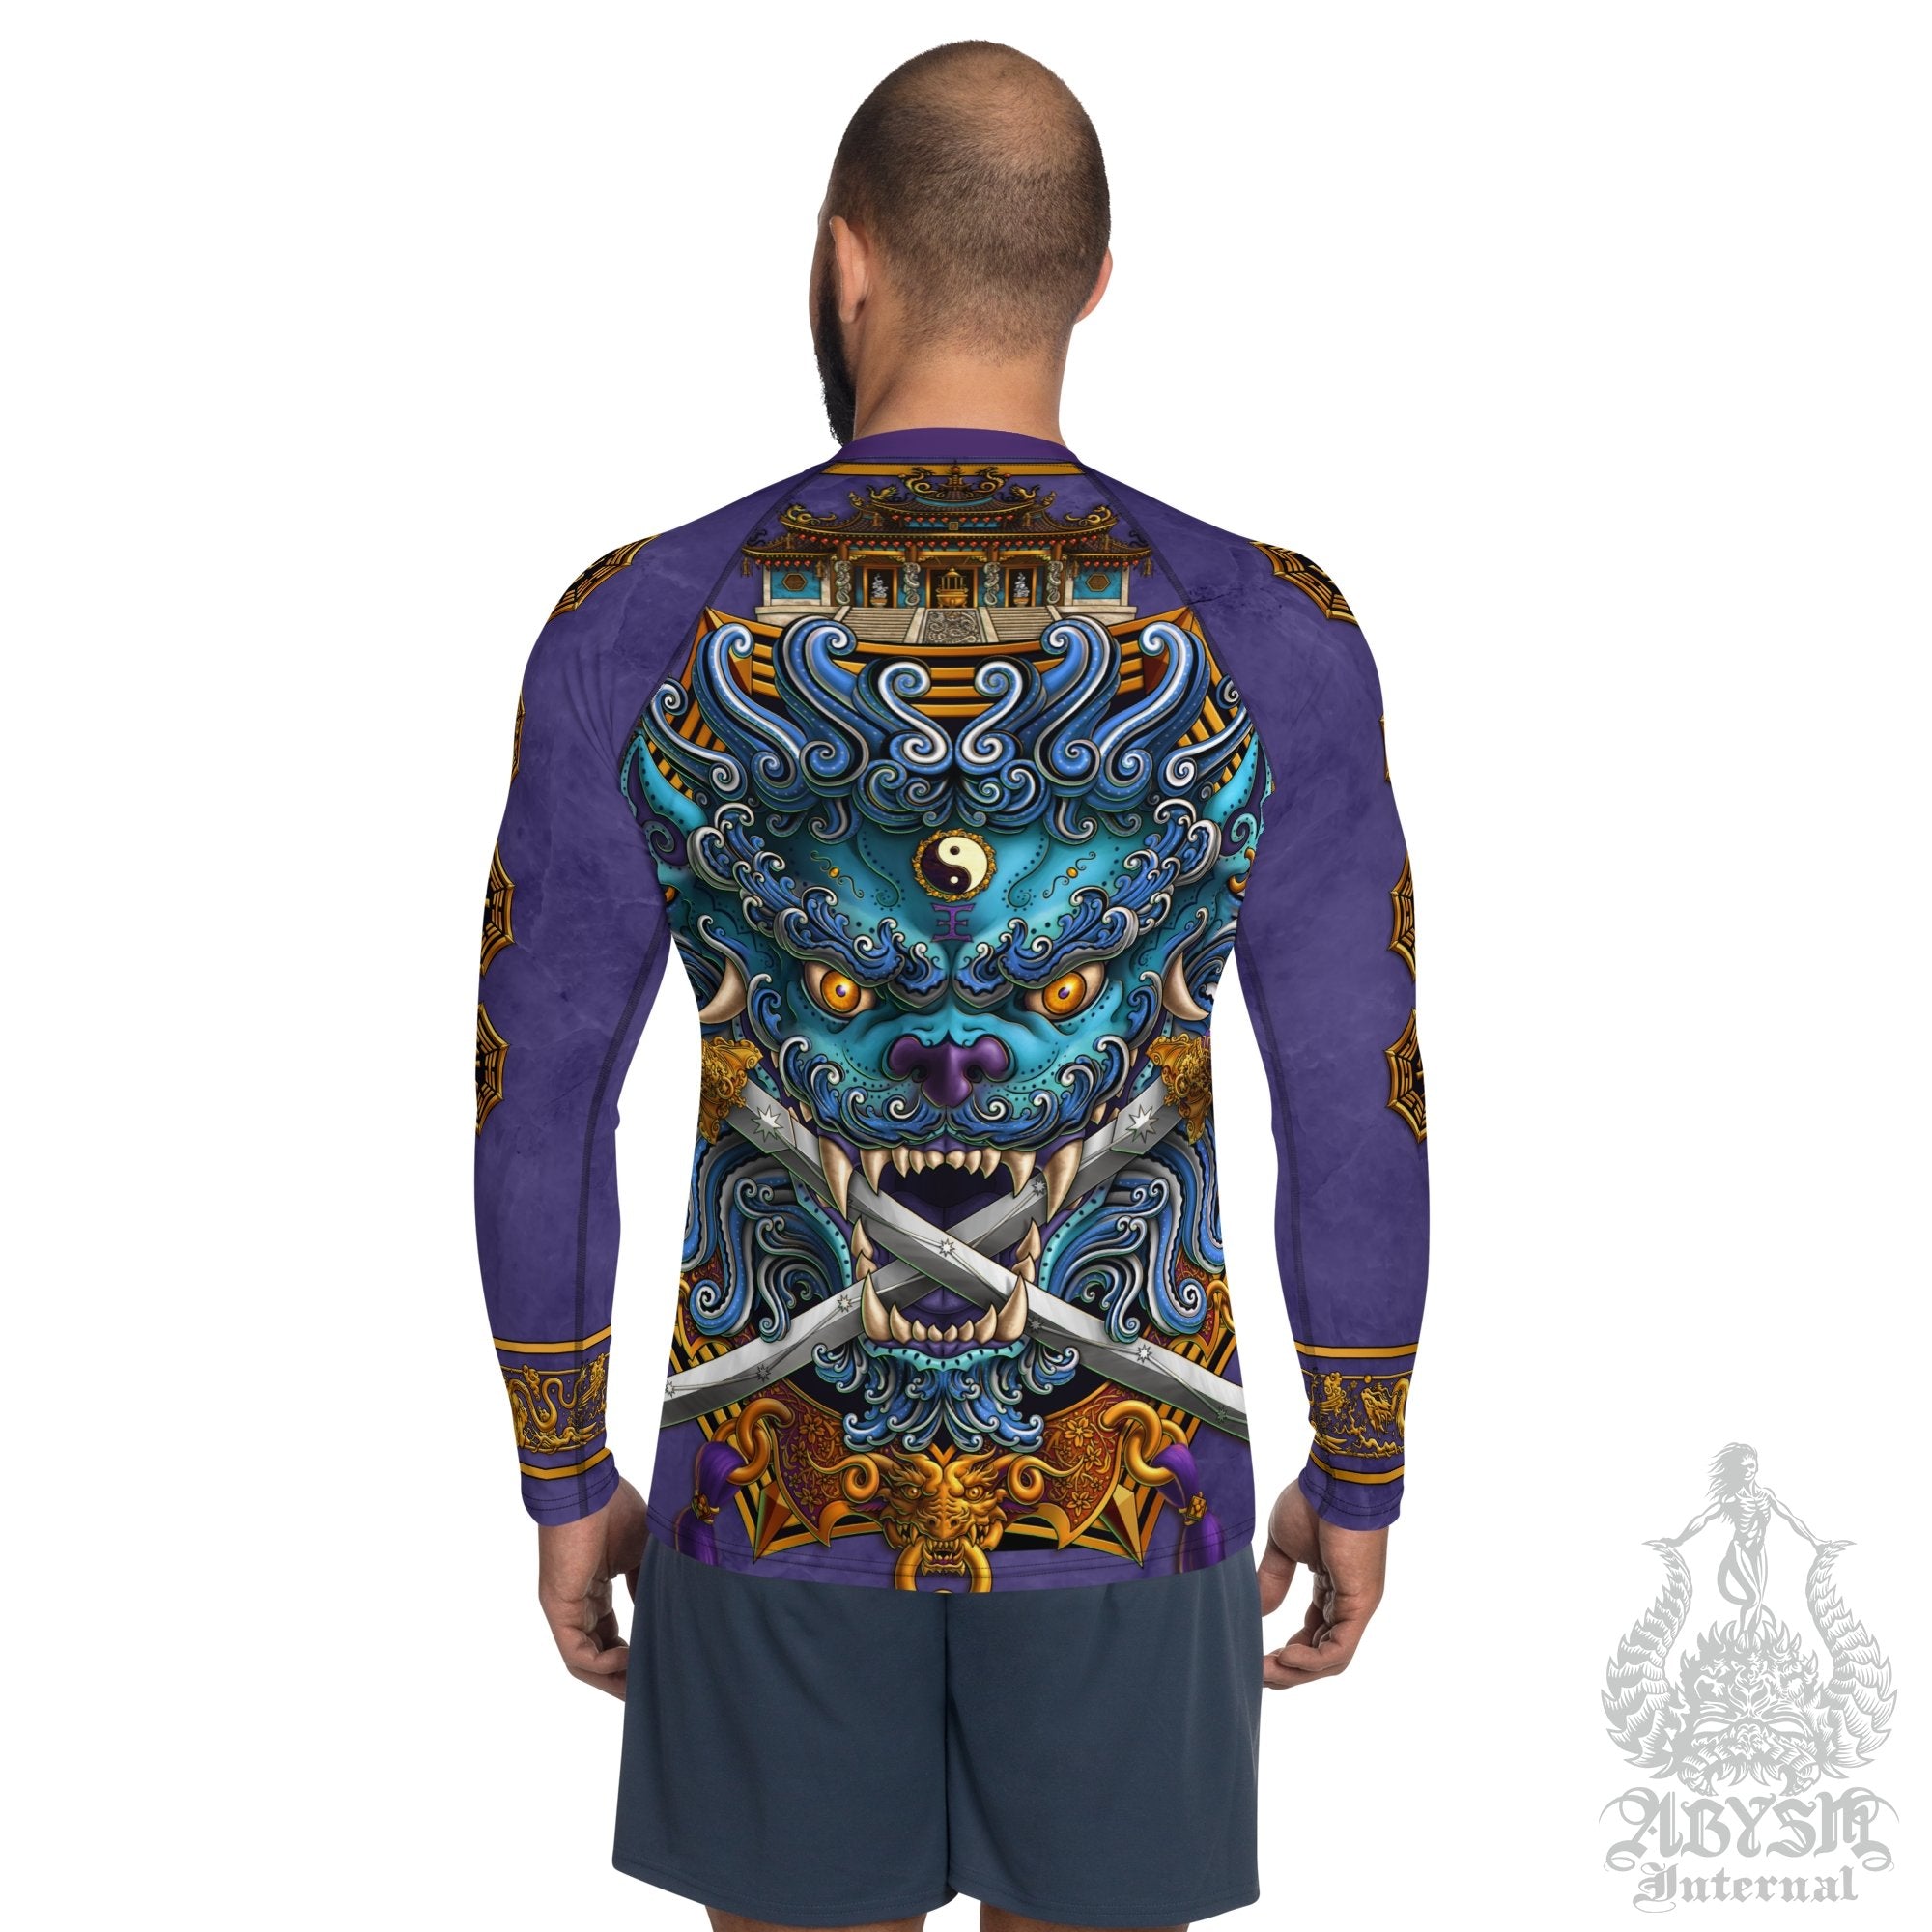 Blue Men's Rash Guard, Long Sleeve spandex shirt for surfing, swimwear top for water sports, Chinese Art, Taiwan Lion - Abysm Internal